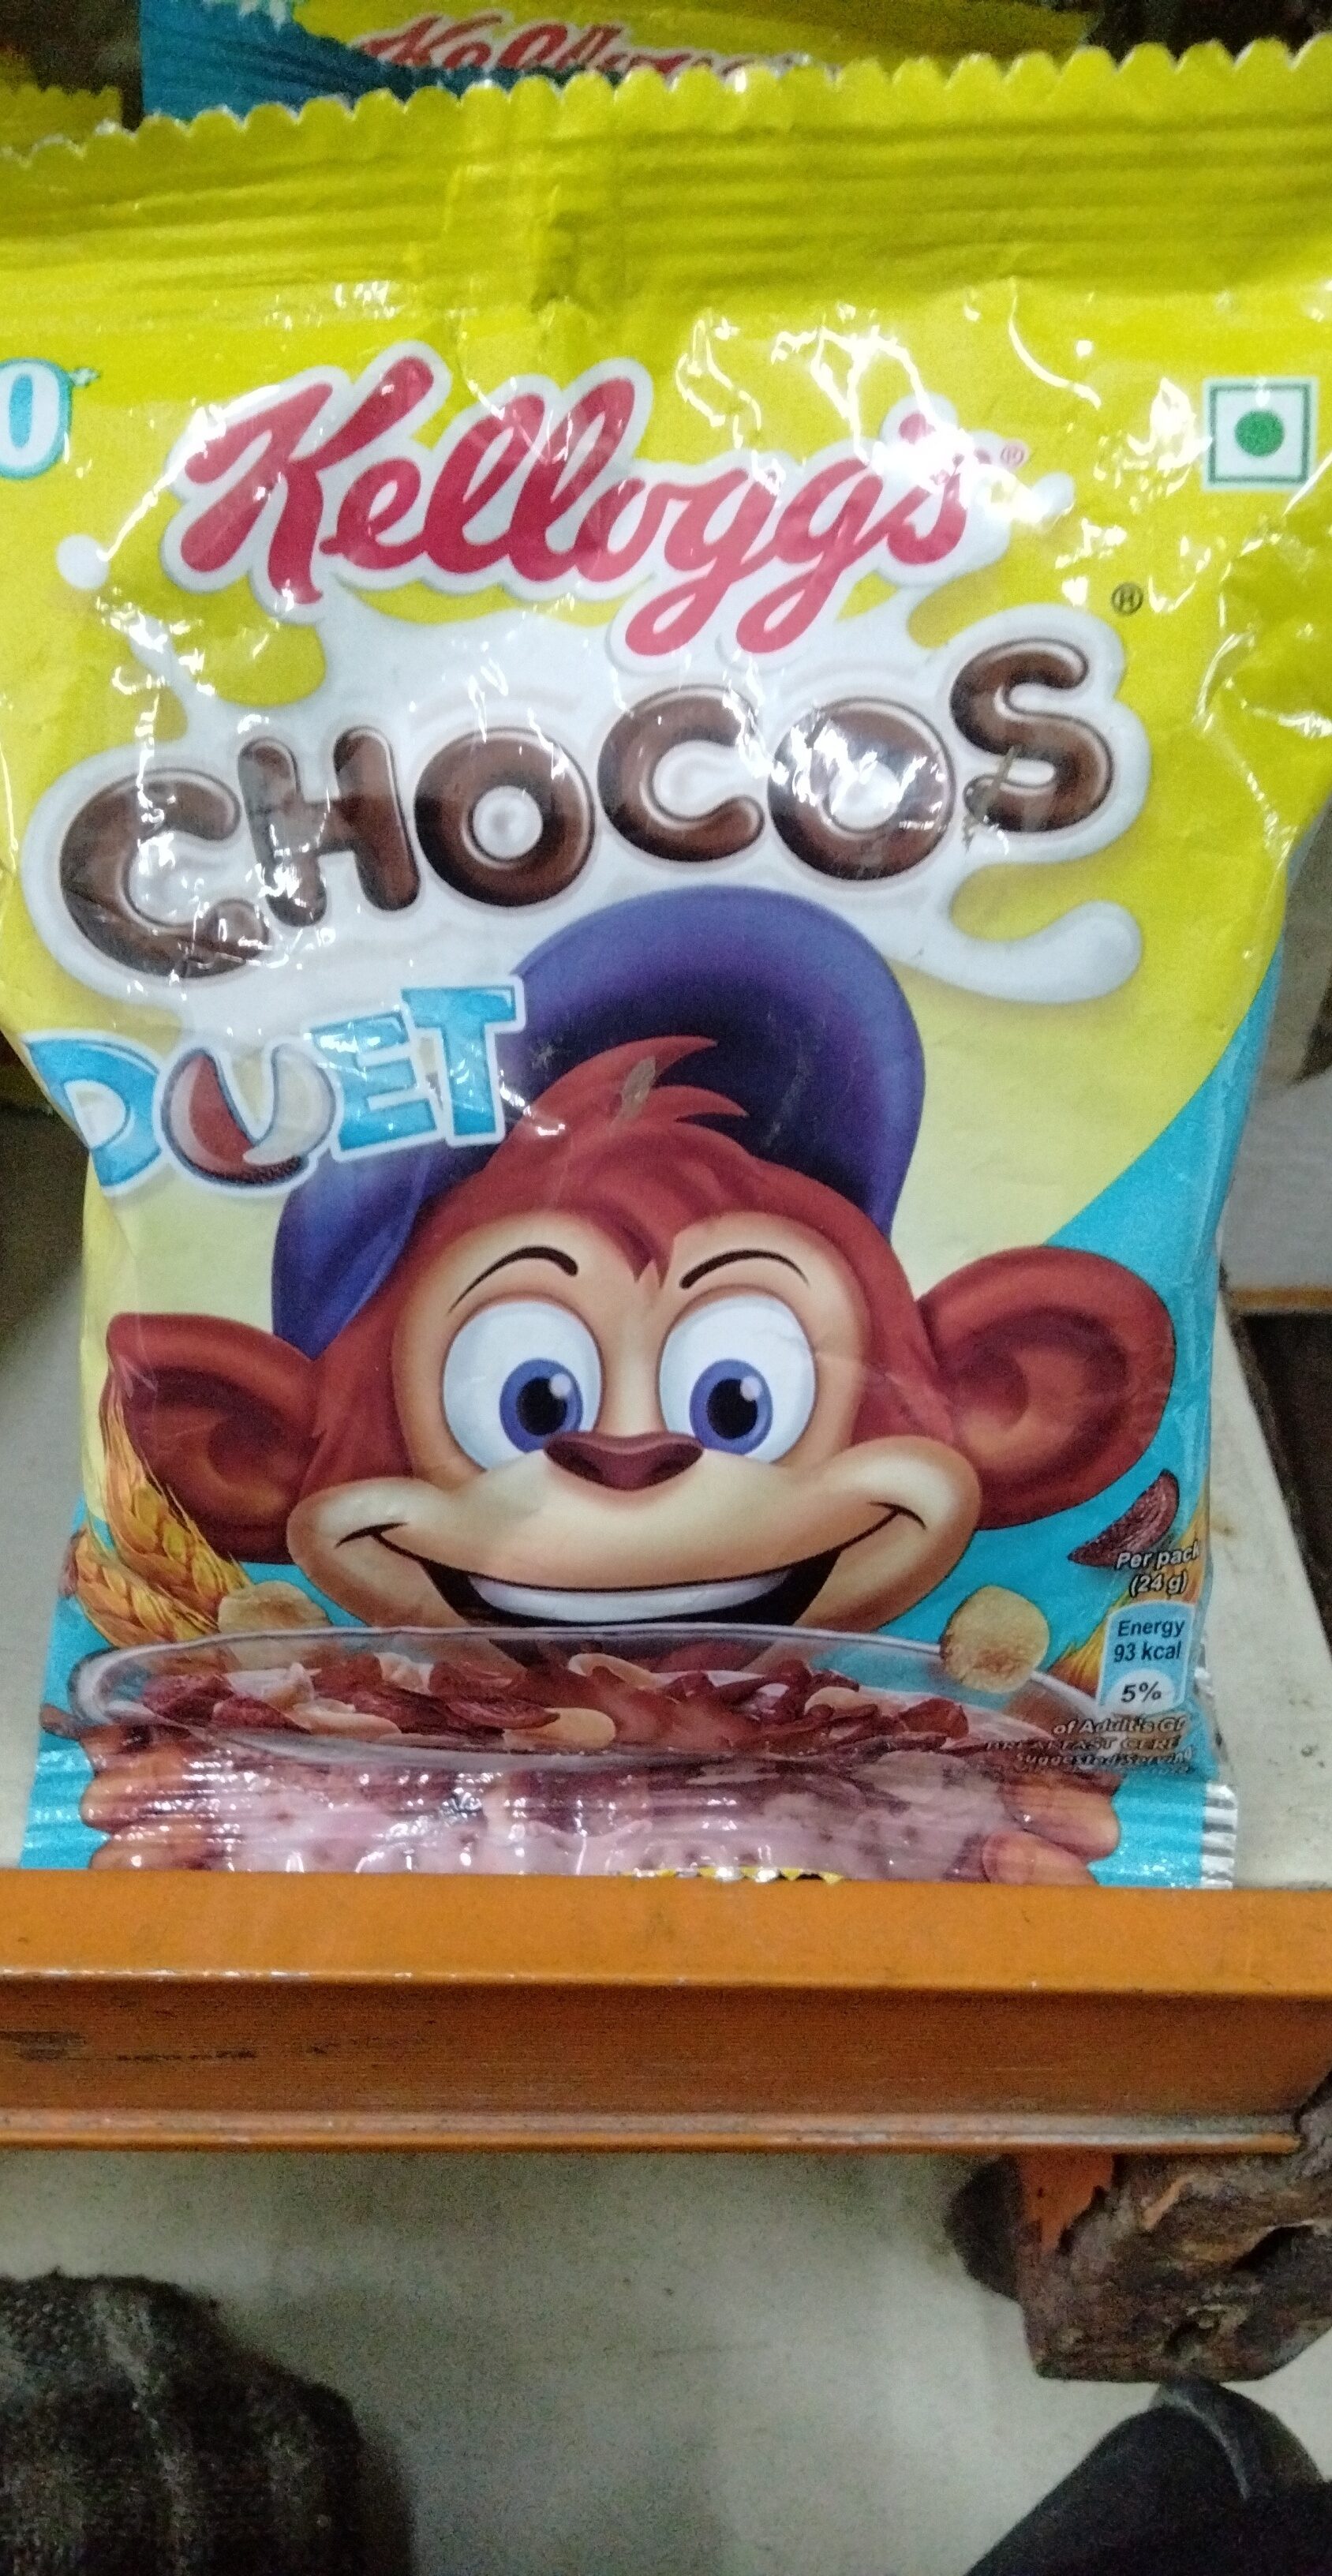 CHOCOS - Product